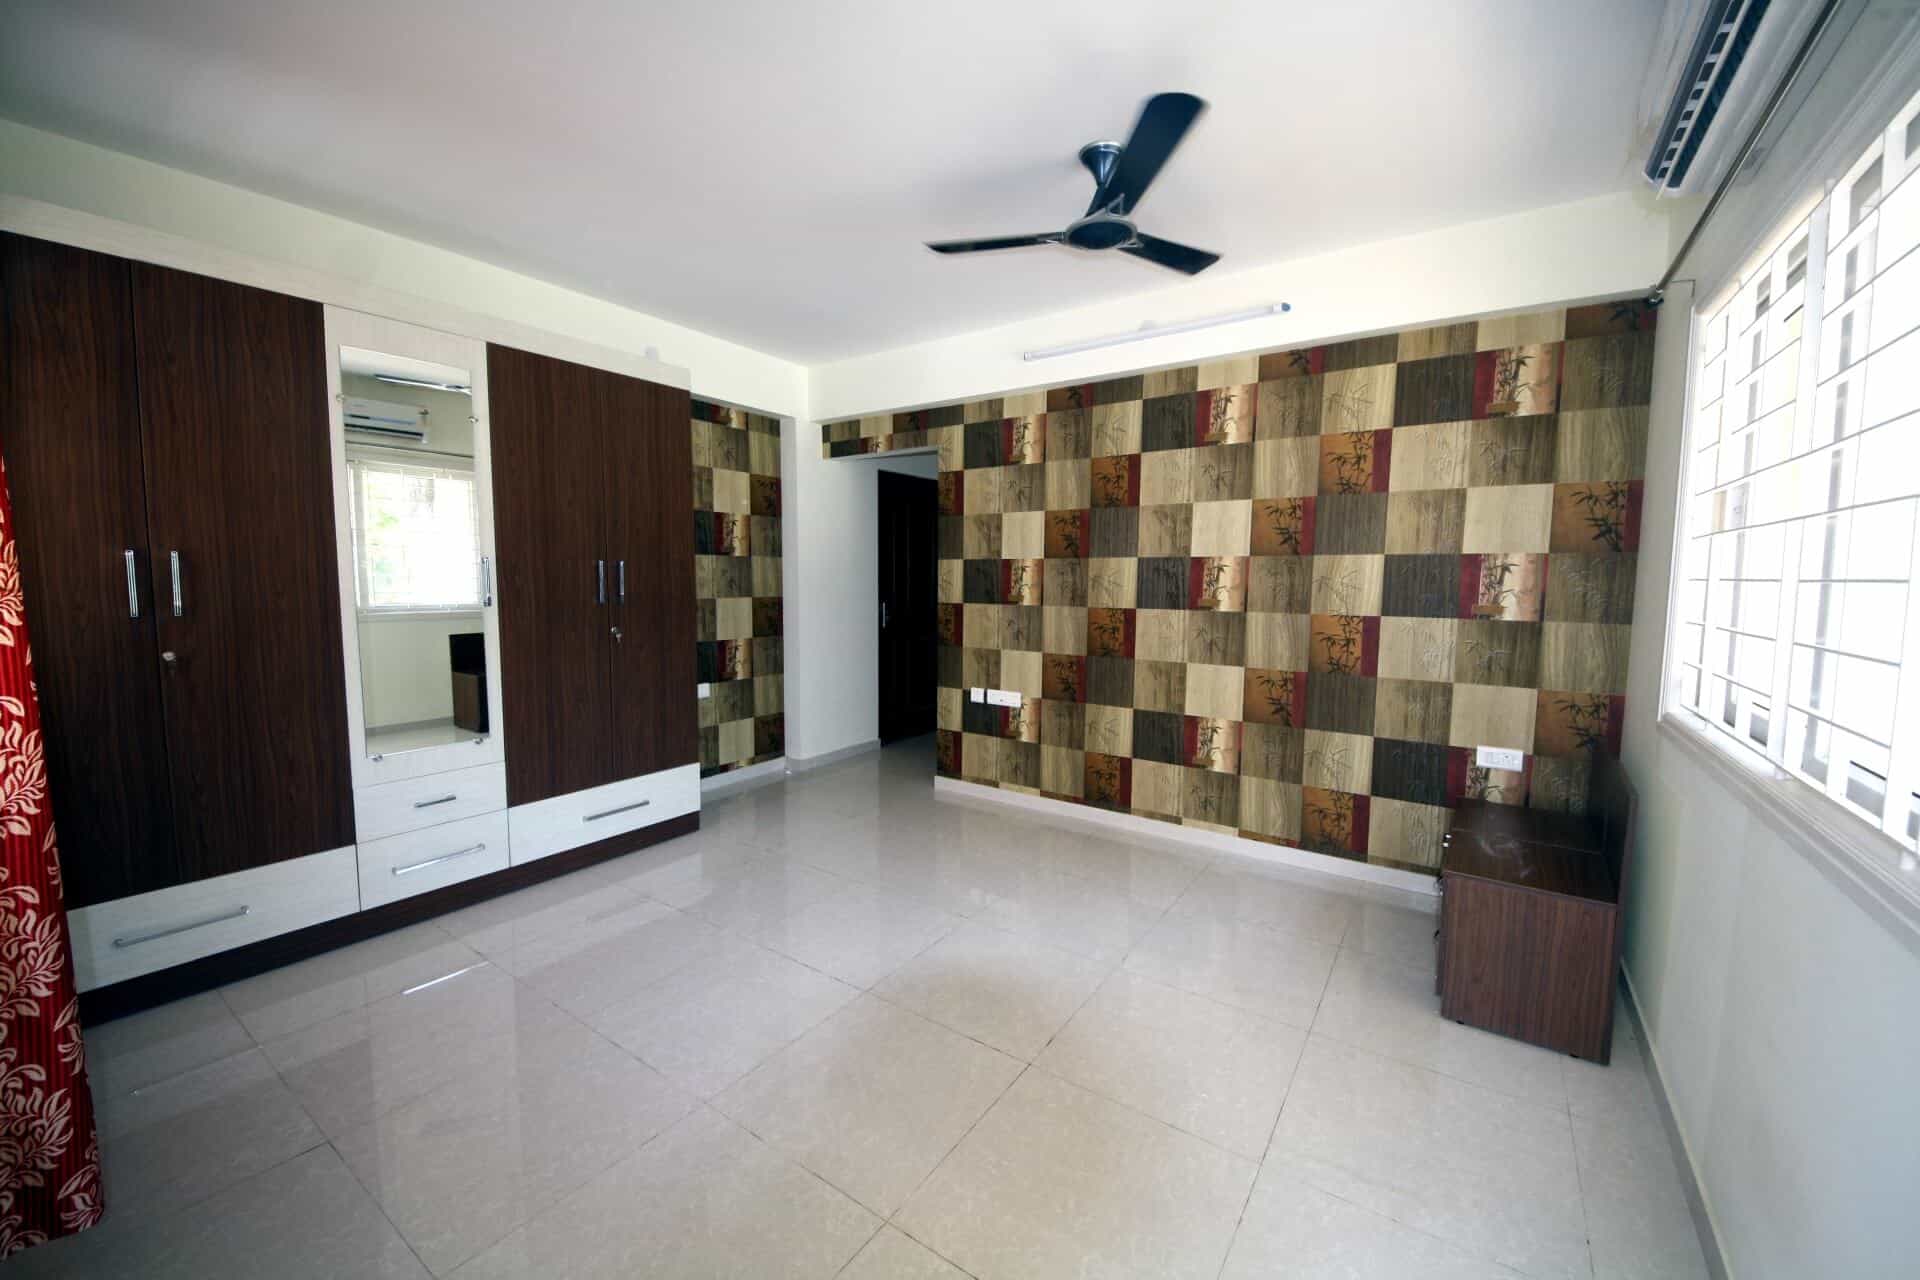 Mr. Prashant Kulkarni’s Residence at Matrix Tranquil Apartment, Bejai, Mangalore